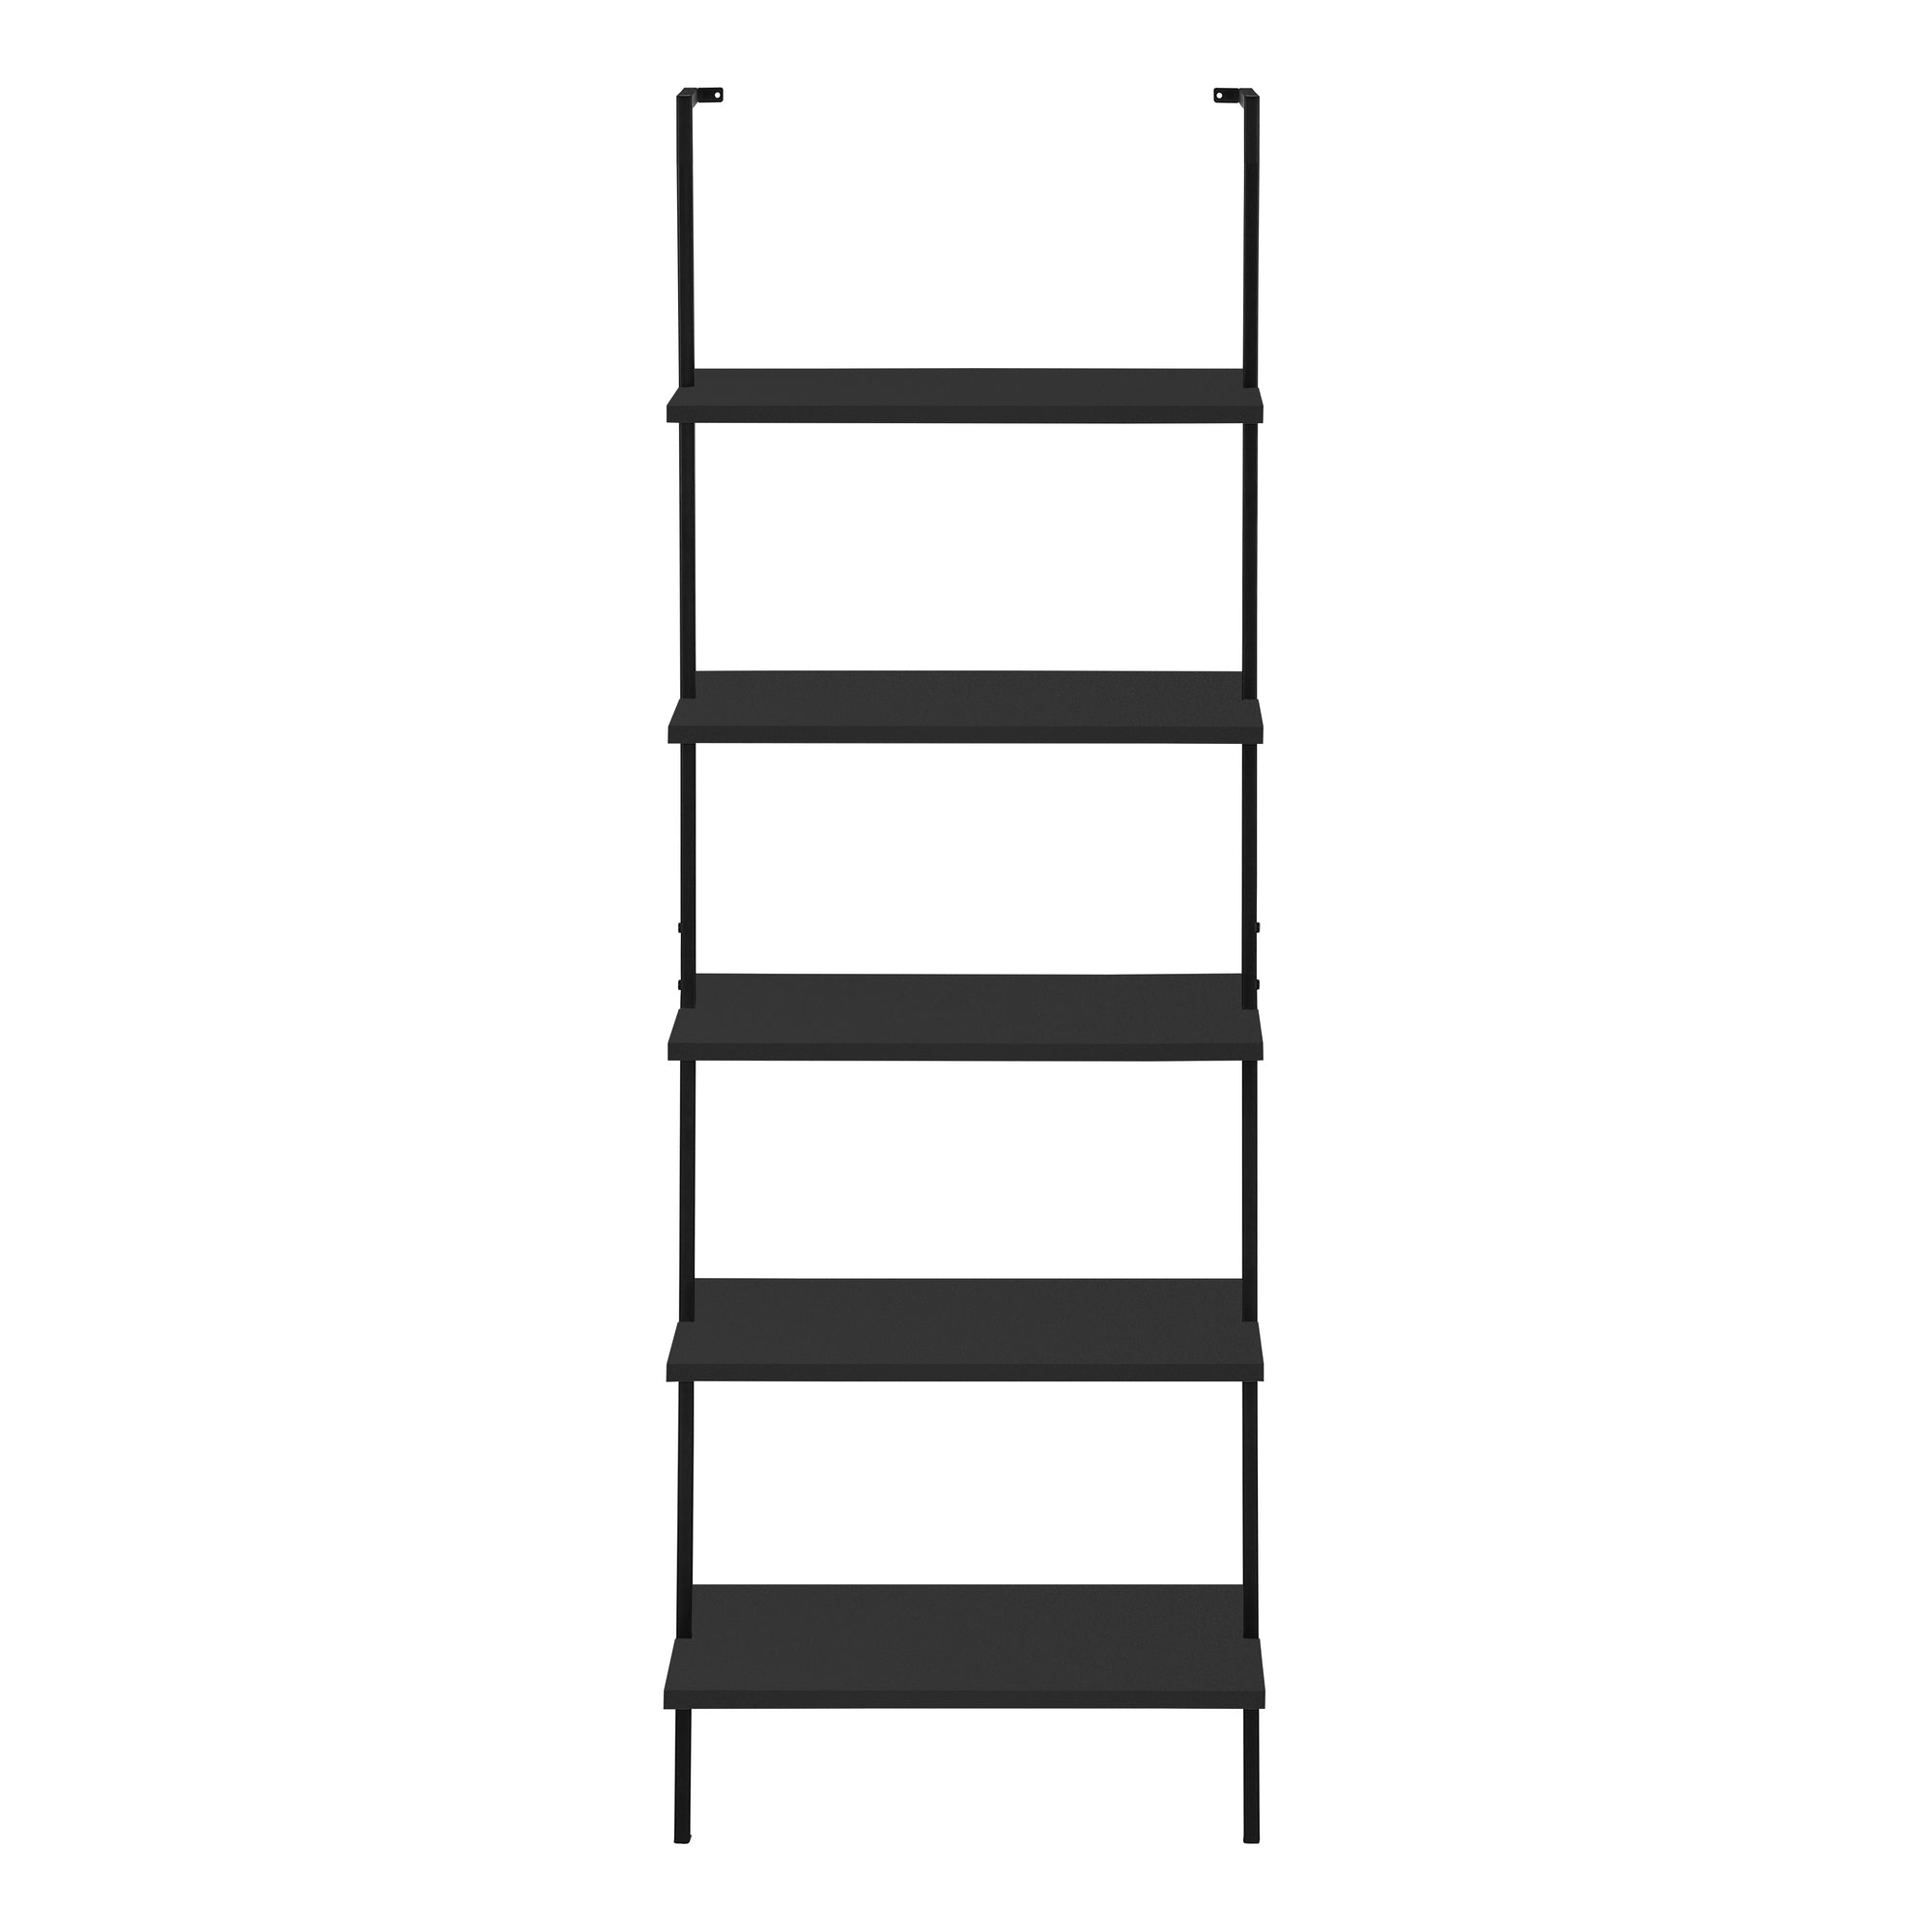 MN-273683    Bookcase - 5 Tier Etagere Ladder Bookshelf - Metal Frame - 72"H - Black